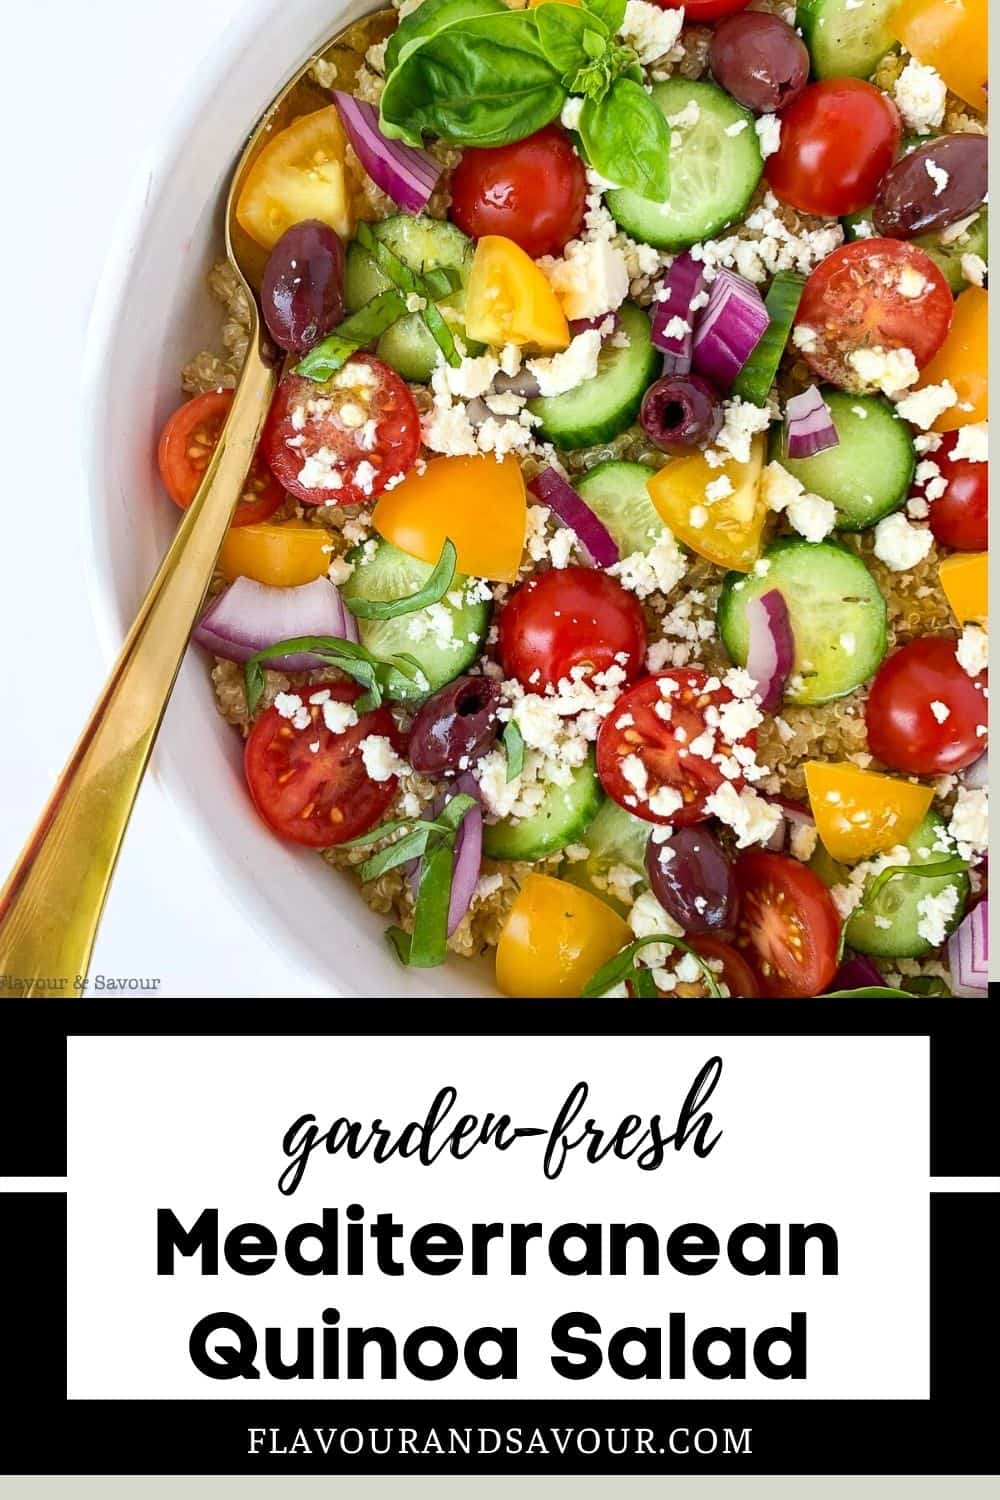 Image and text for garden fresh Mediterranean Quinoa Salad.